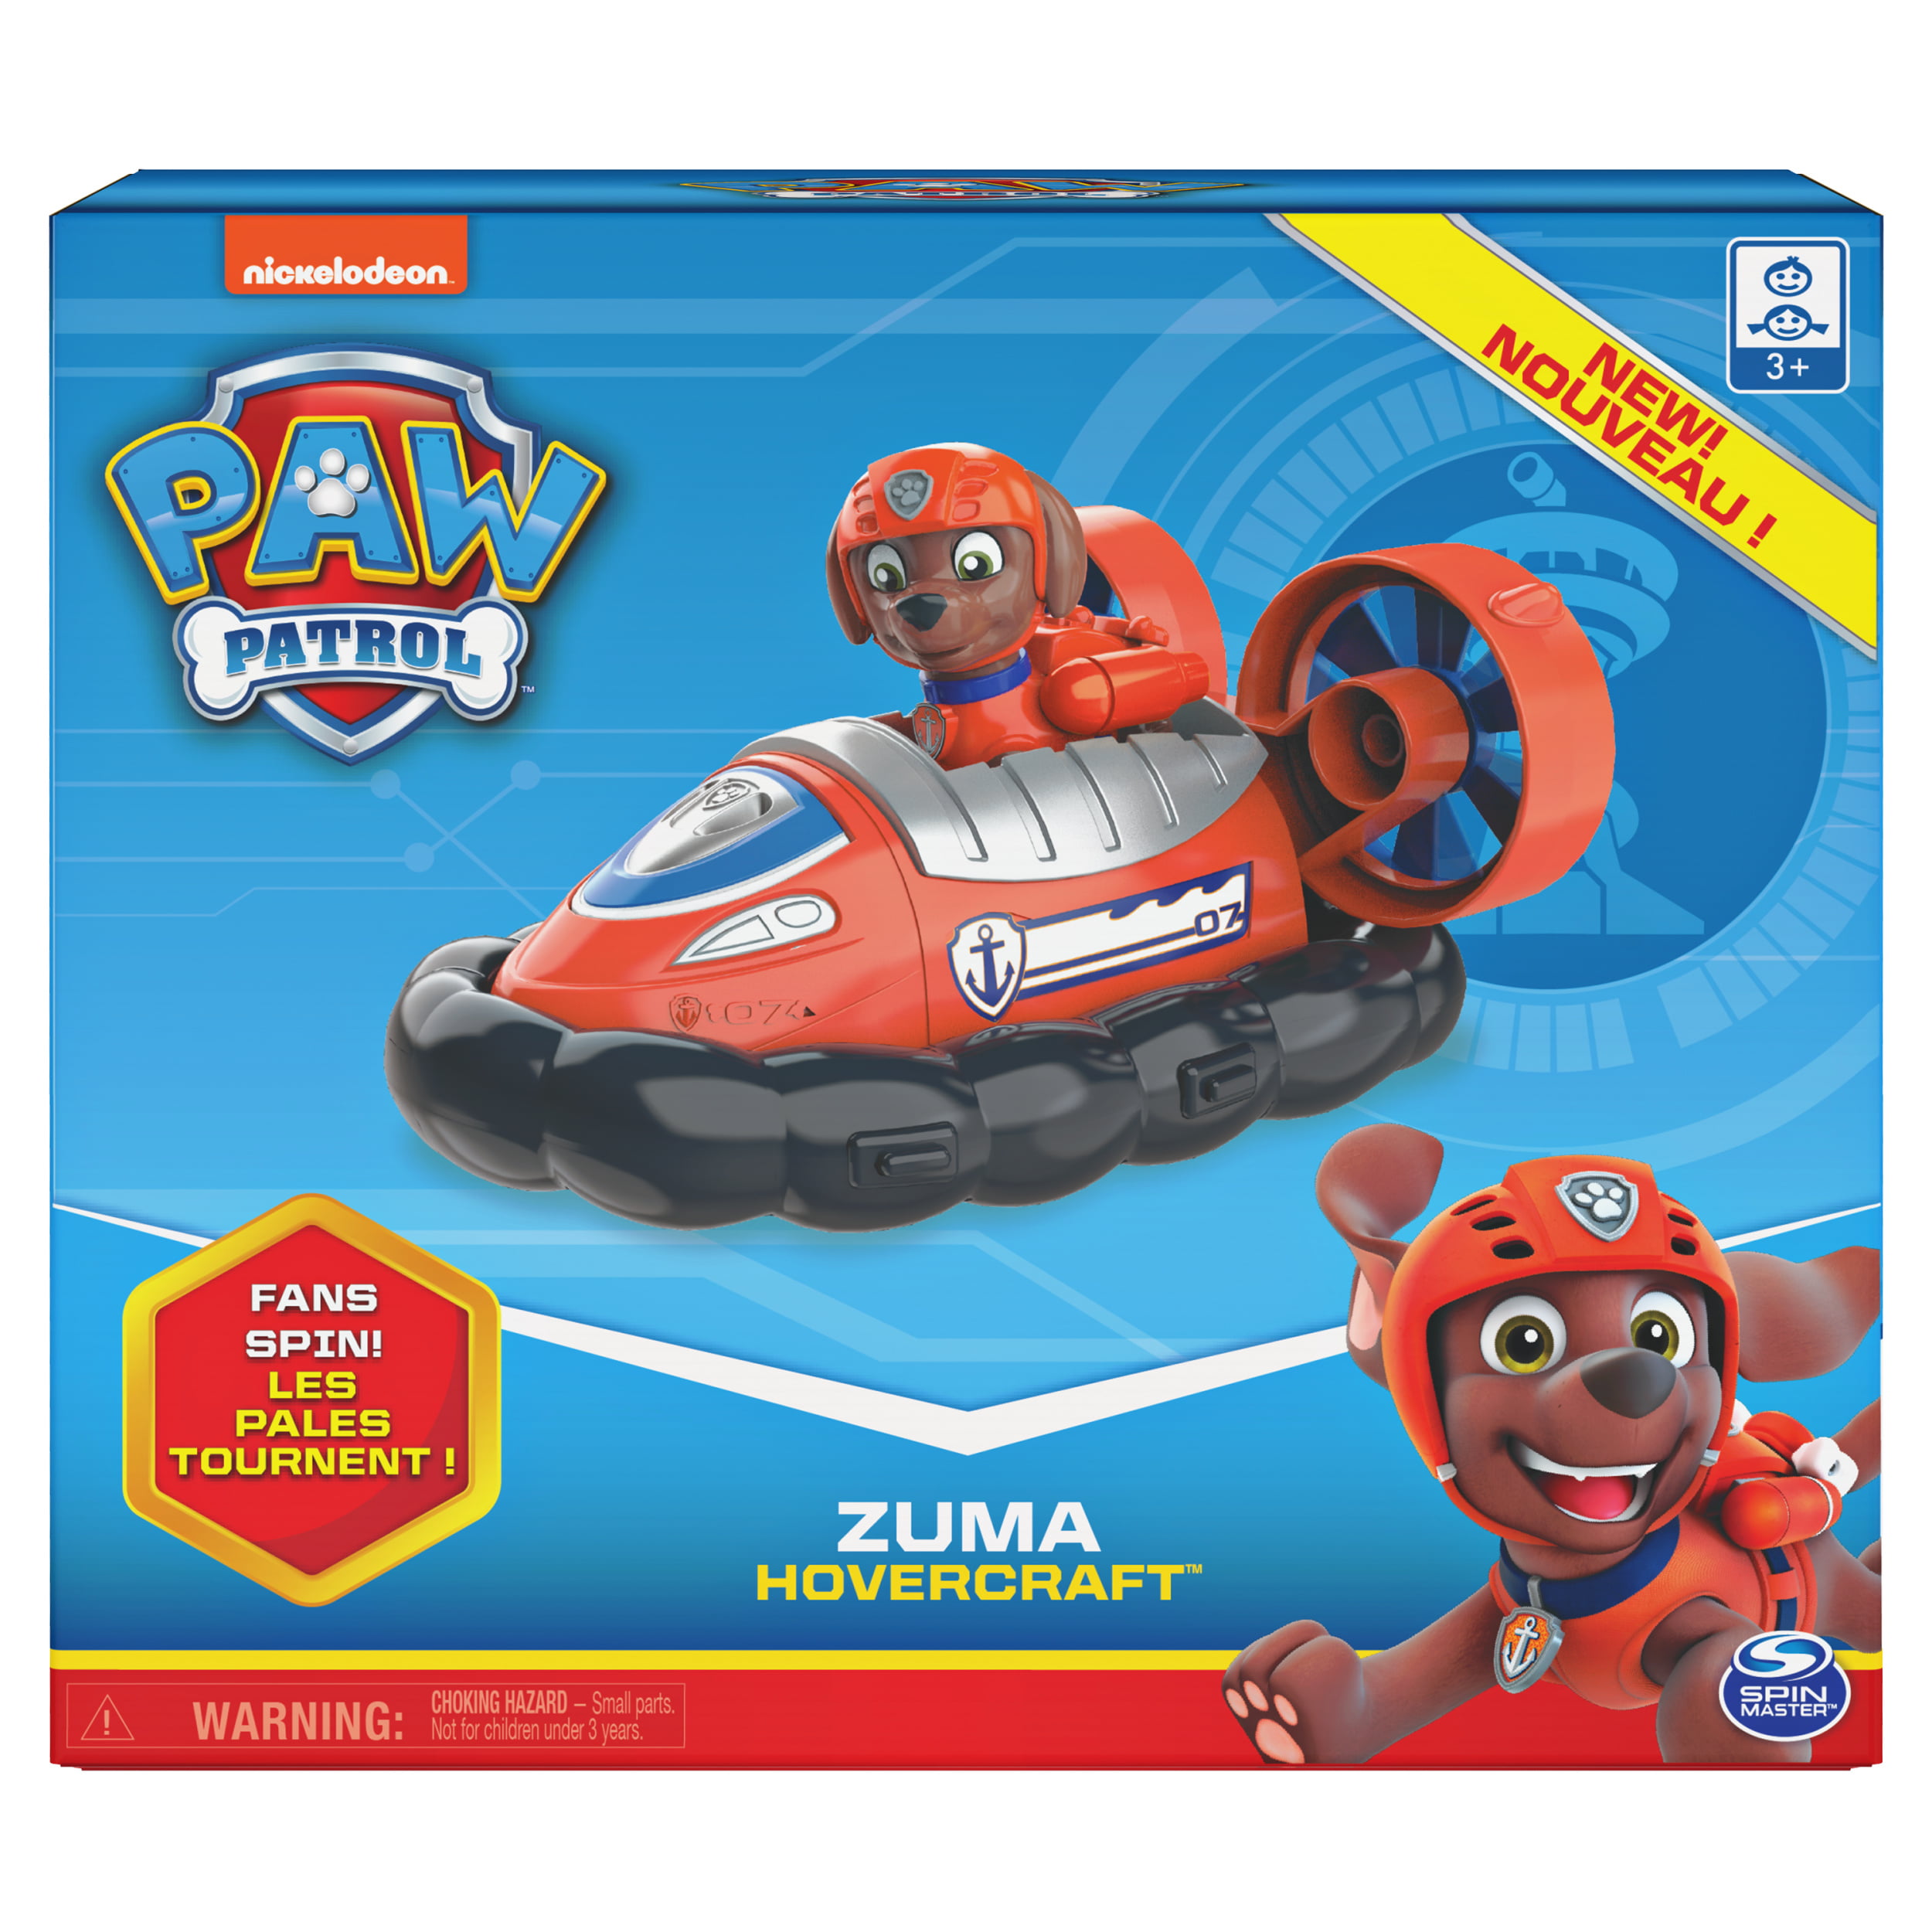 Paw Patrol Zuma Hovercraft Vehicle Spin Master 2018 Nickelodeon #6052303 